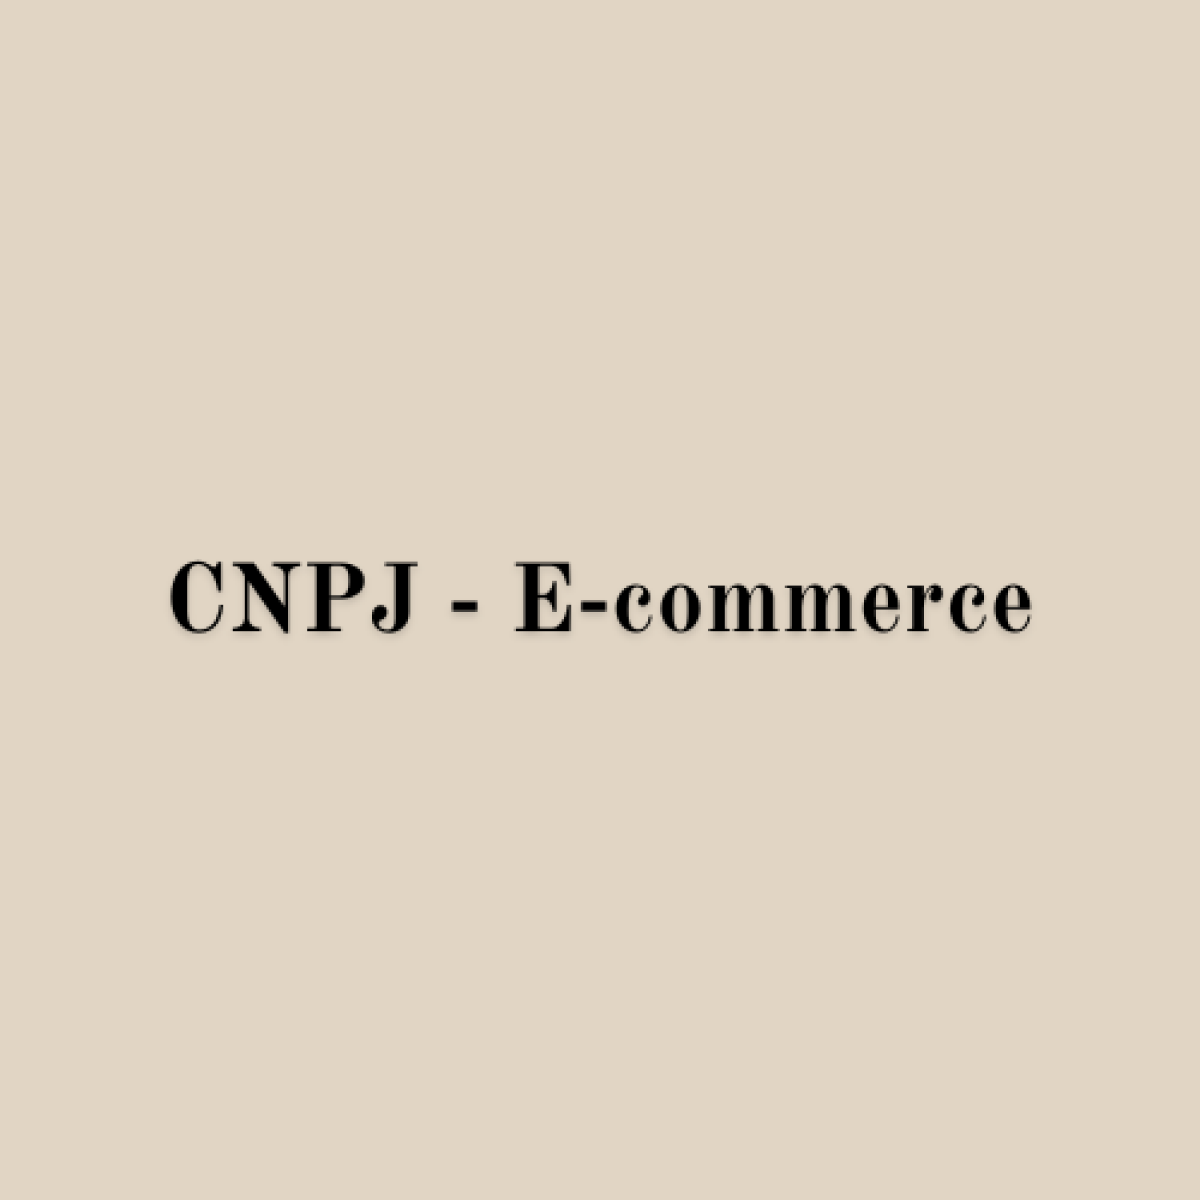 CNPJ - E-commerce